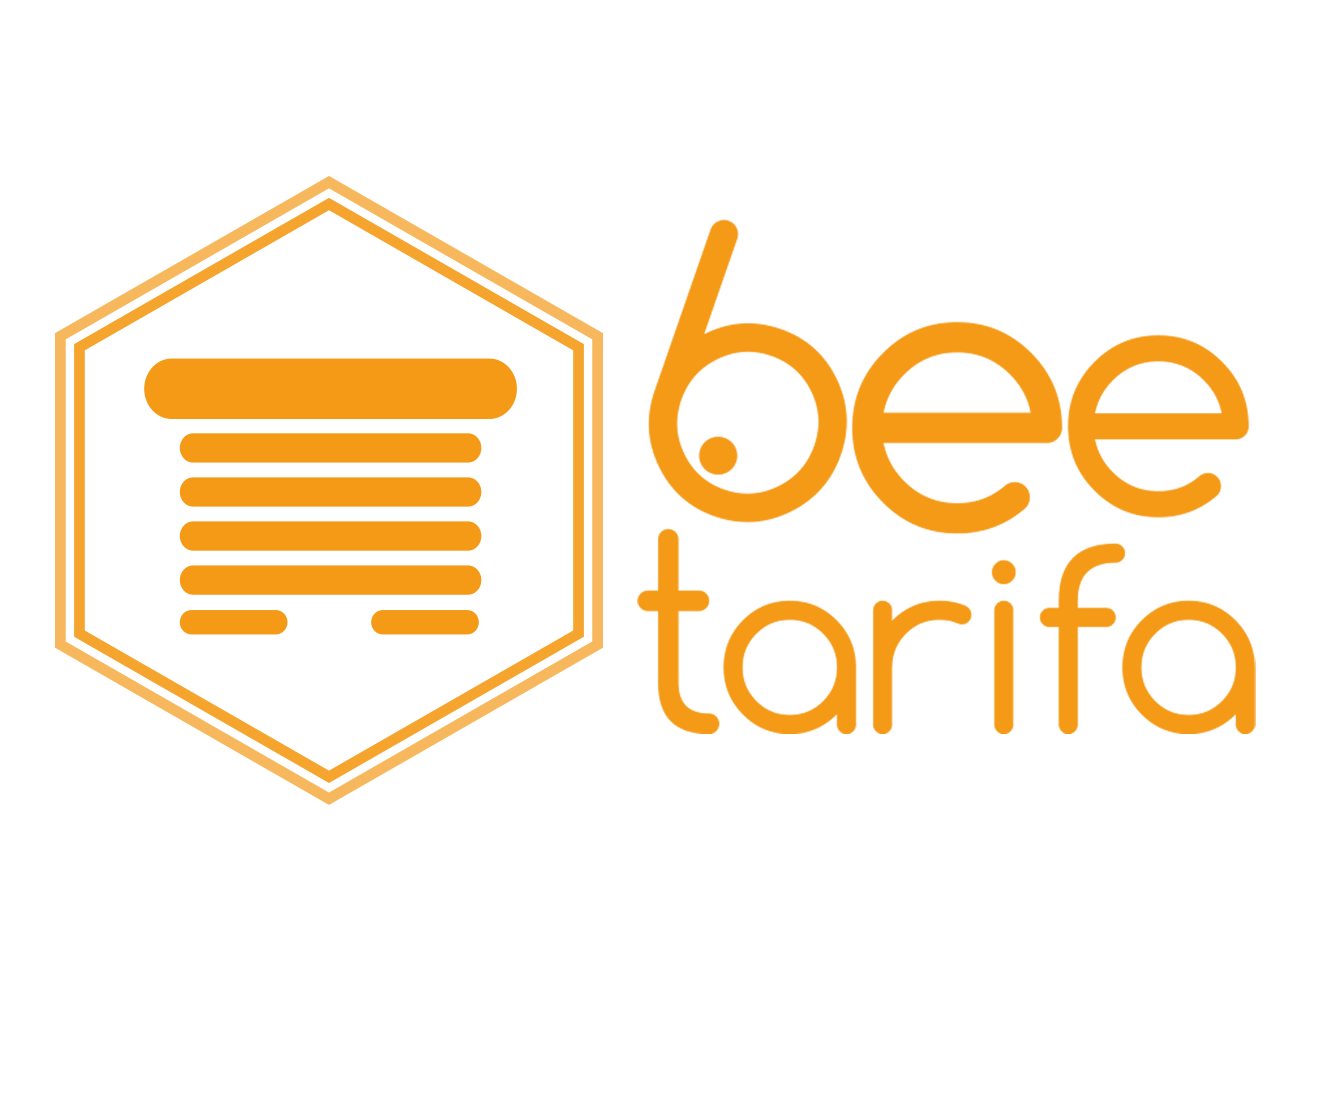 Logo Bee Tarifa, la miel pura, natural, ecologica de cadiz andalucia españa